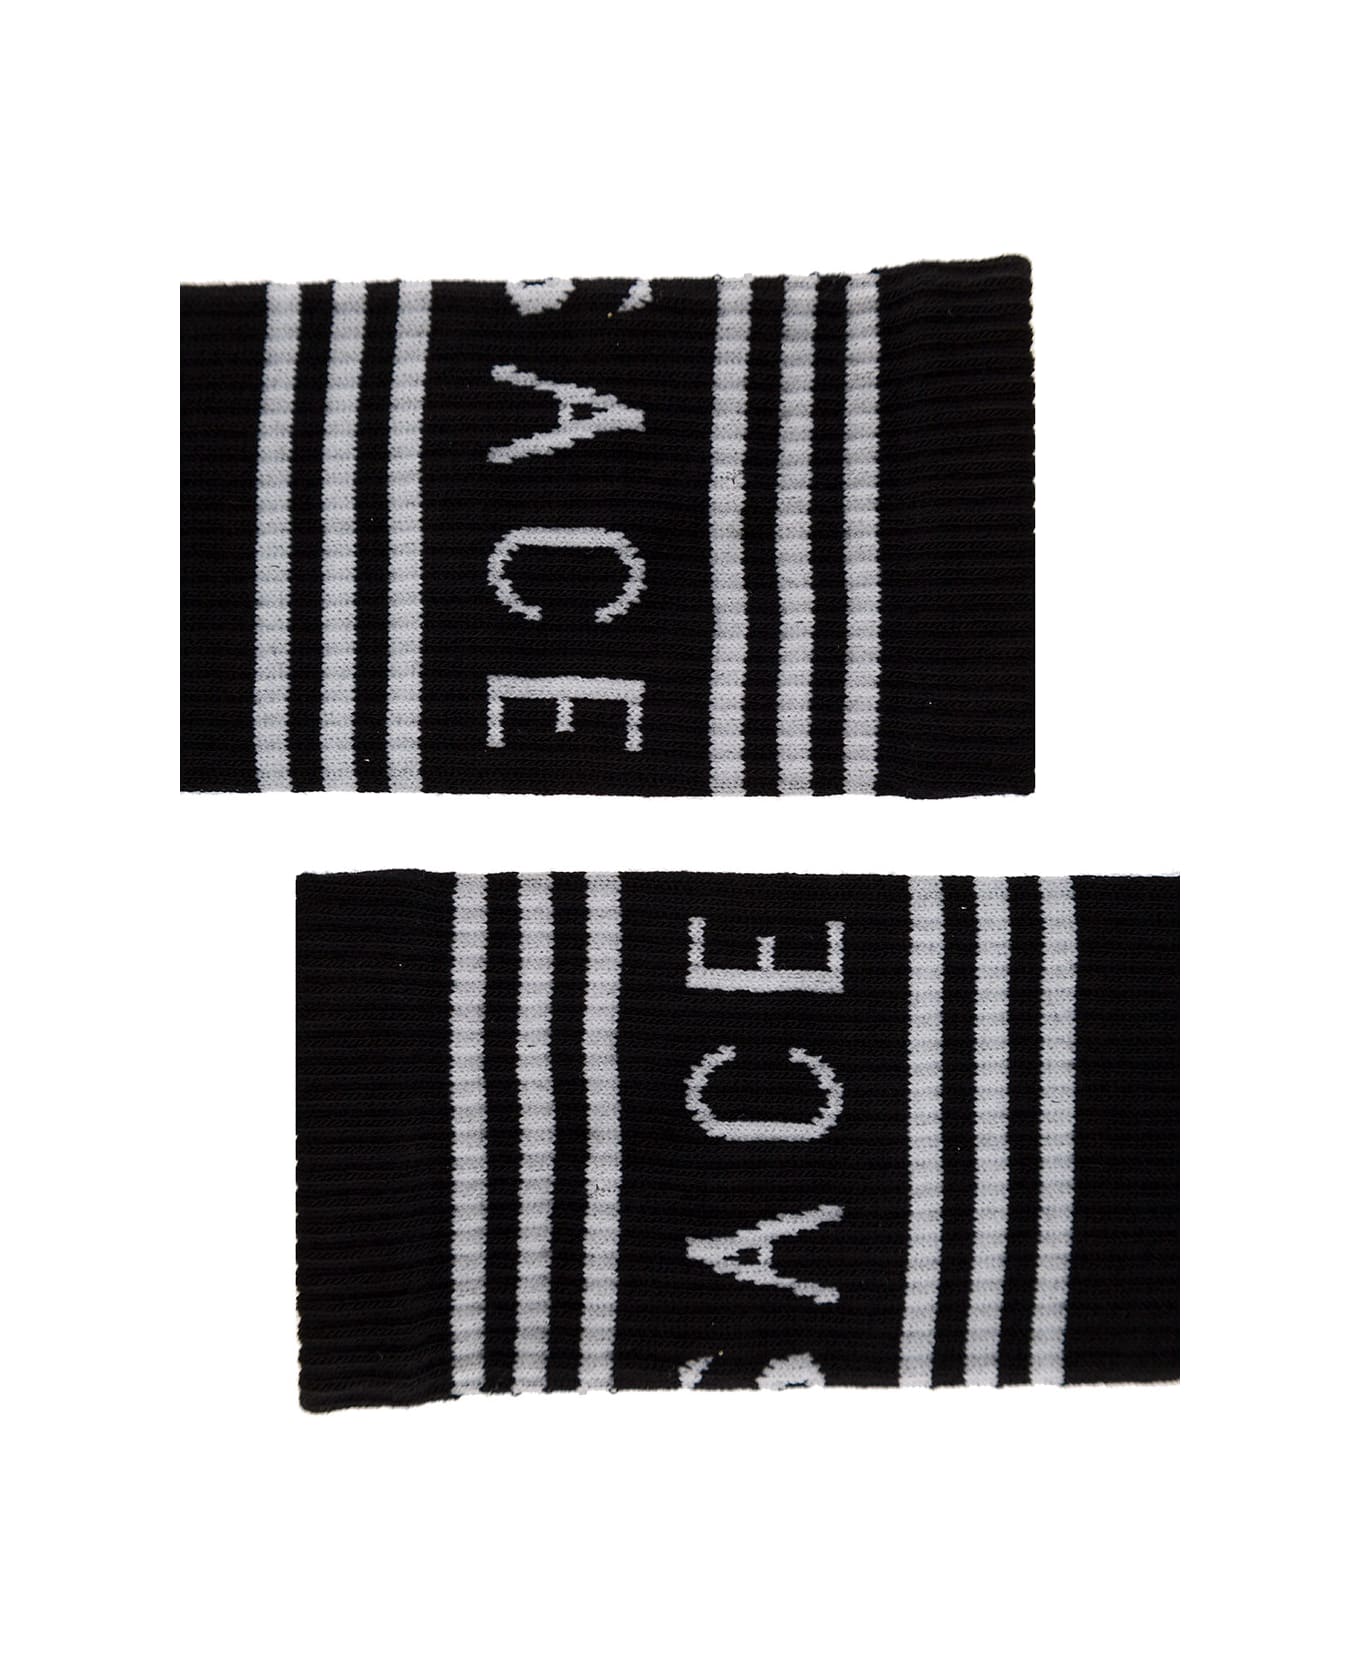 Versace Socks With Logo - Black 靴下